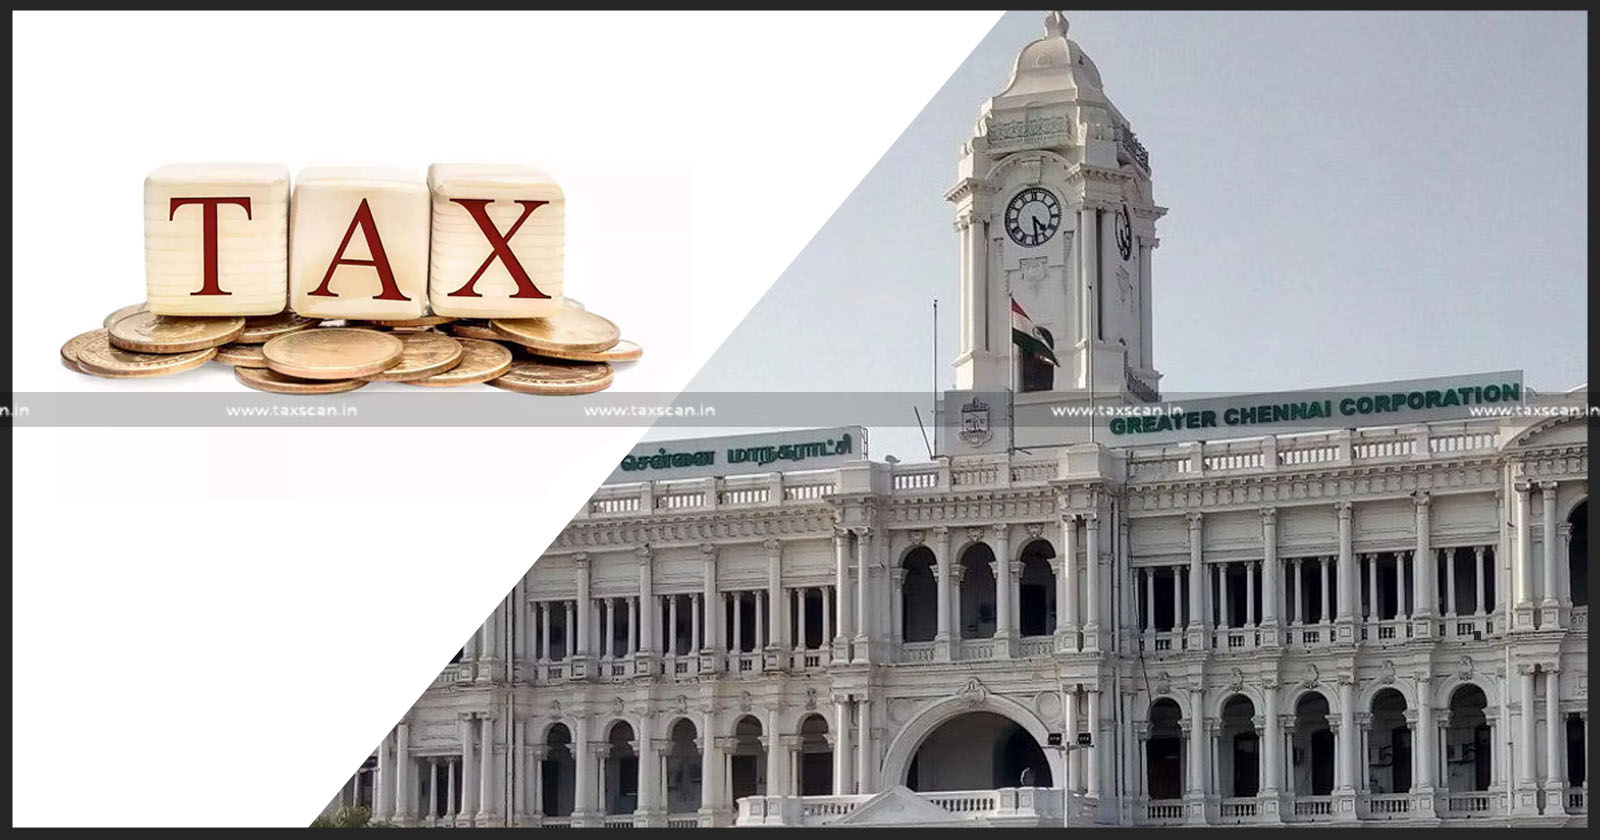 Increase - Property- Tax -Rates- Raises- Chennai- Corporation’s -Revenue-TAXSCAN